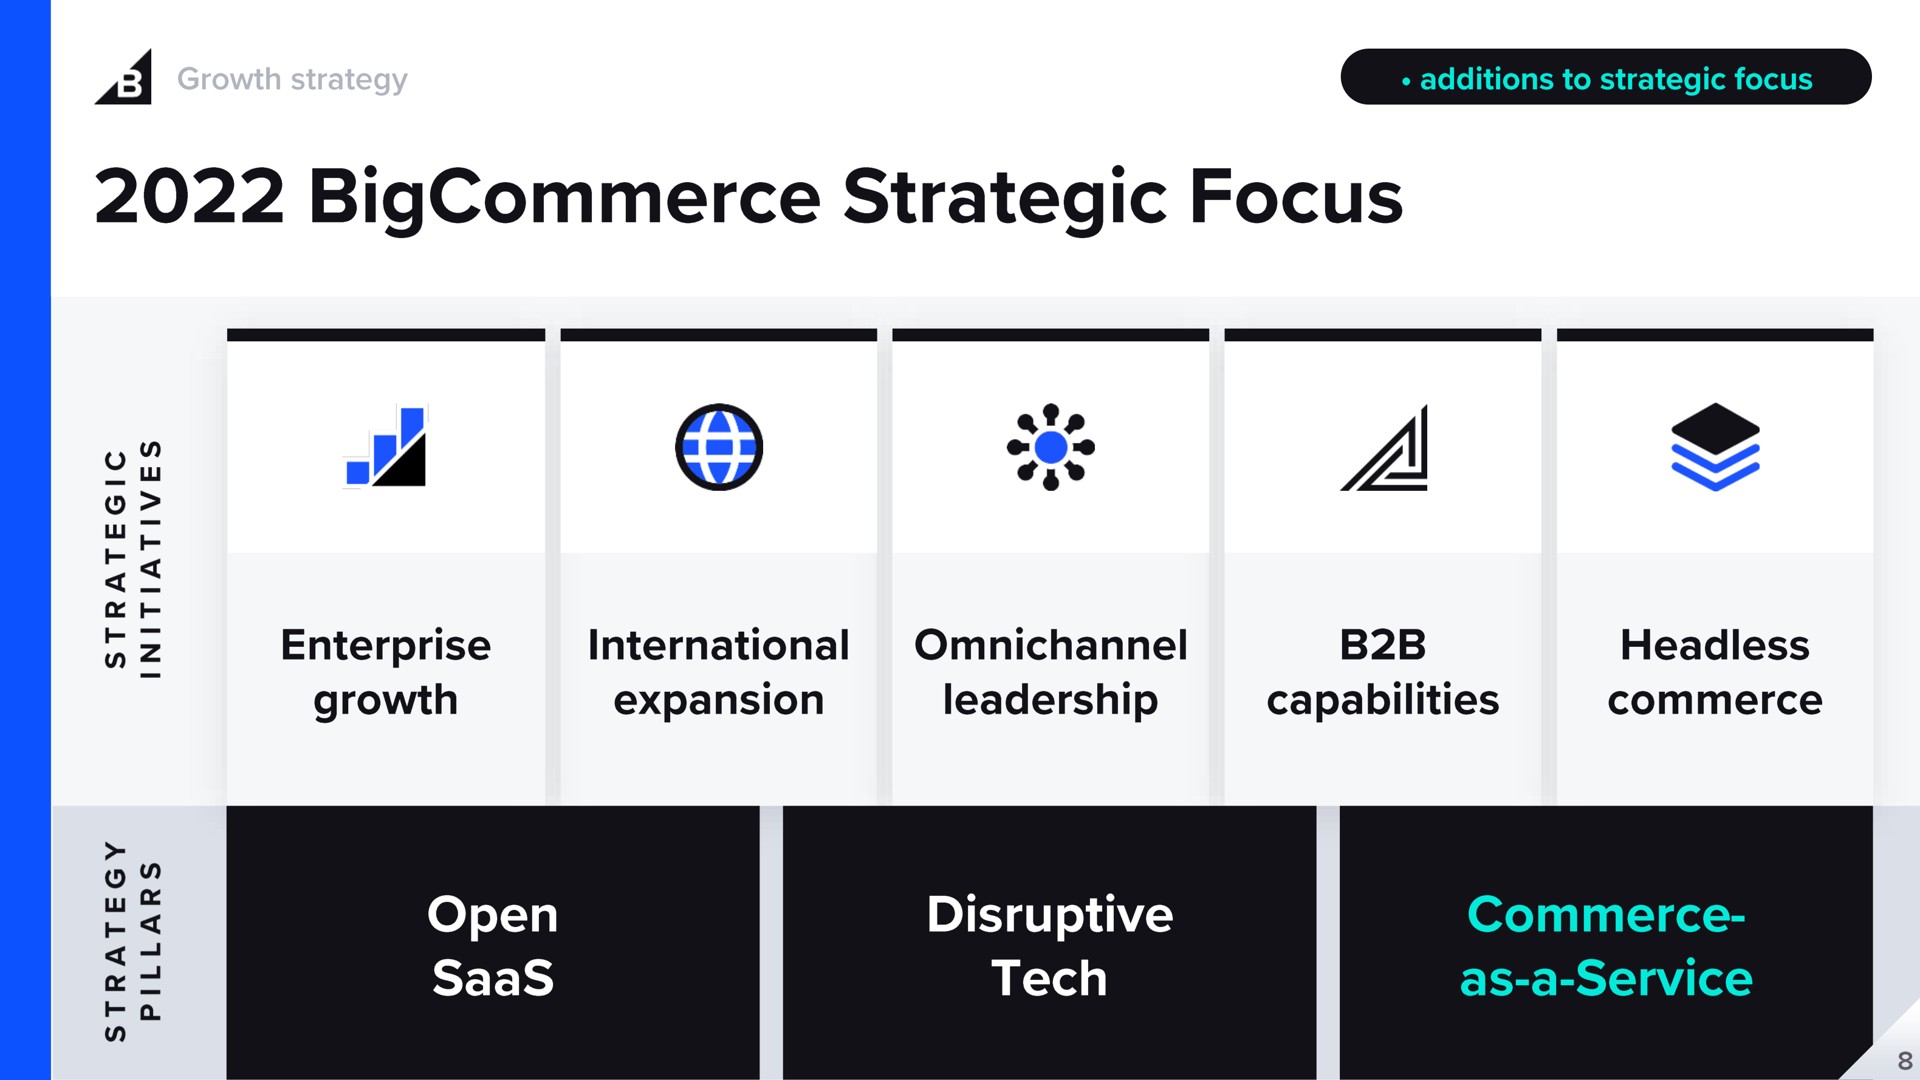 strategic focus enterprise growth international expansion leadership capabilities headless commerce open disruptive tech commerce as a service | BigCommerce